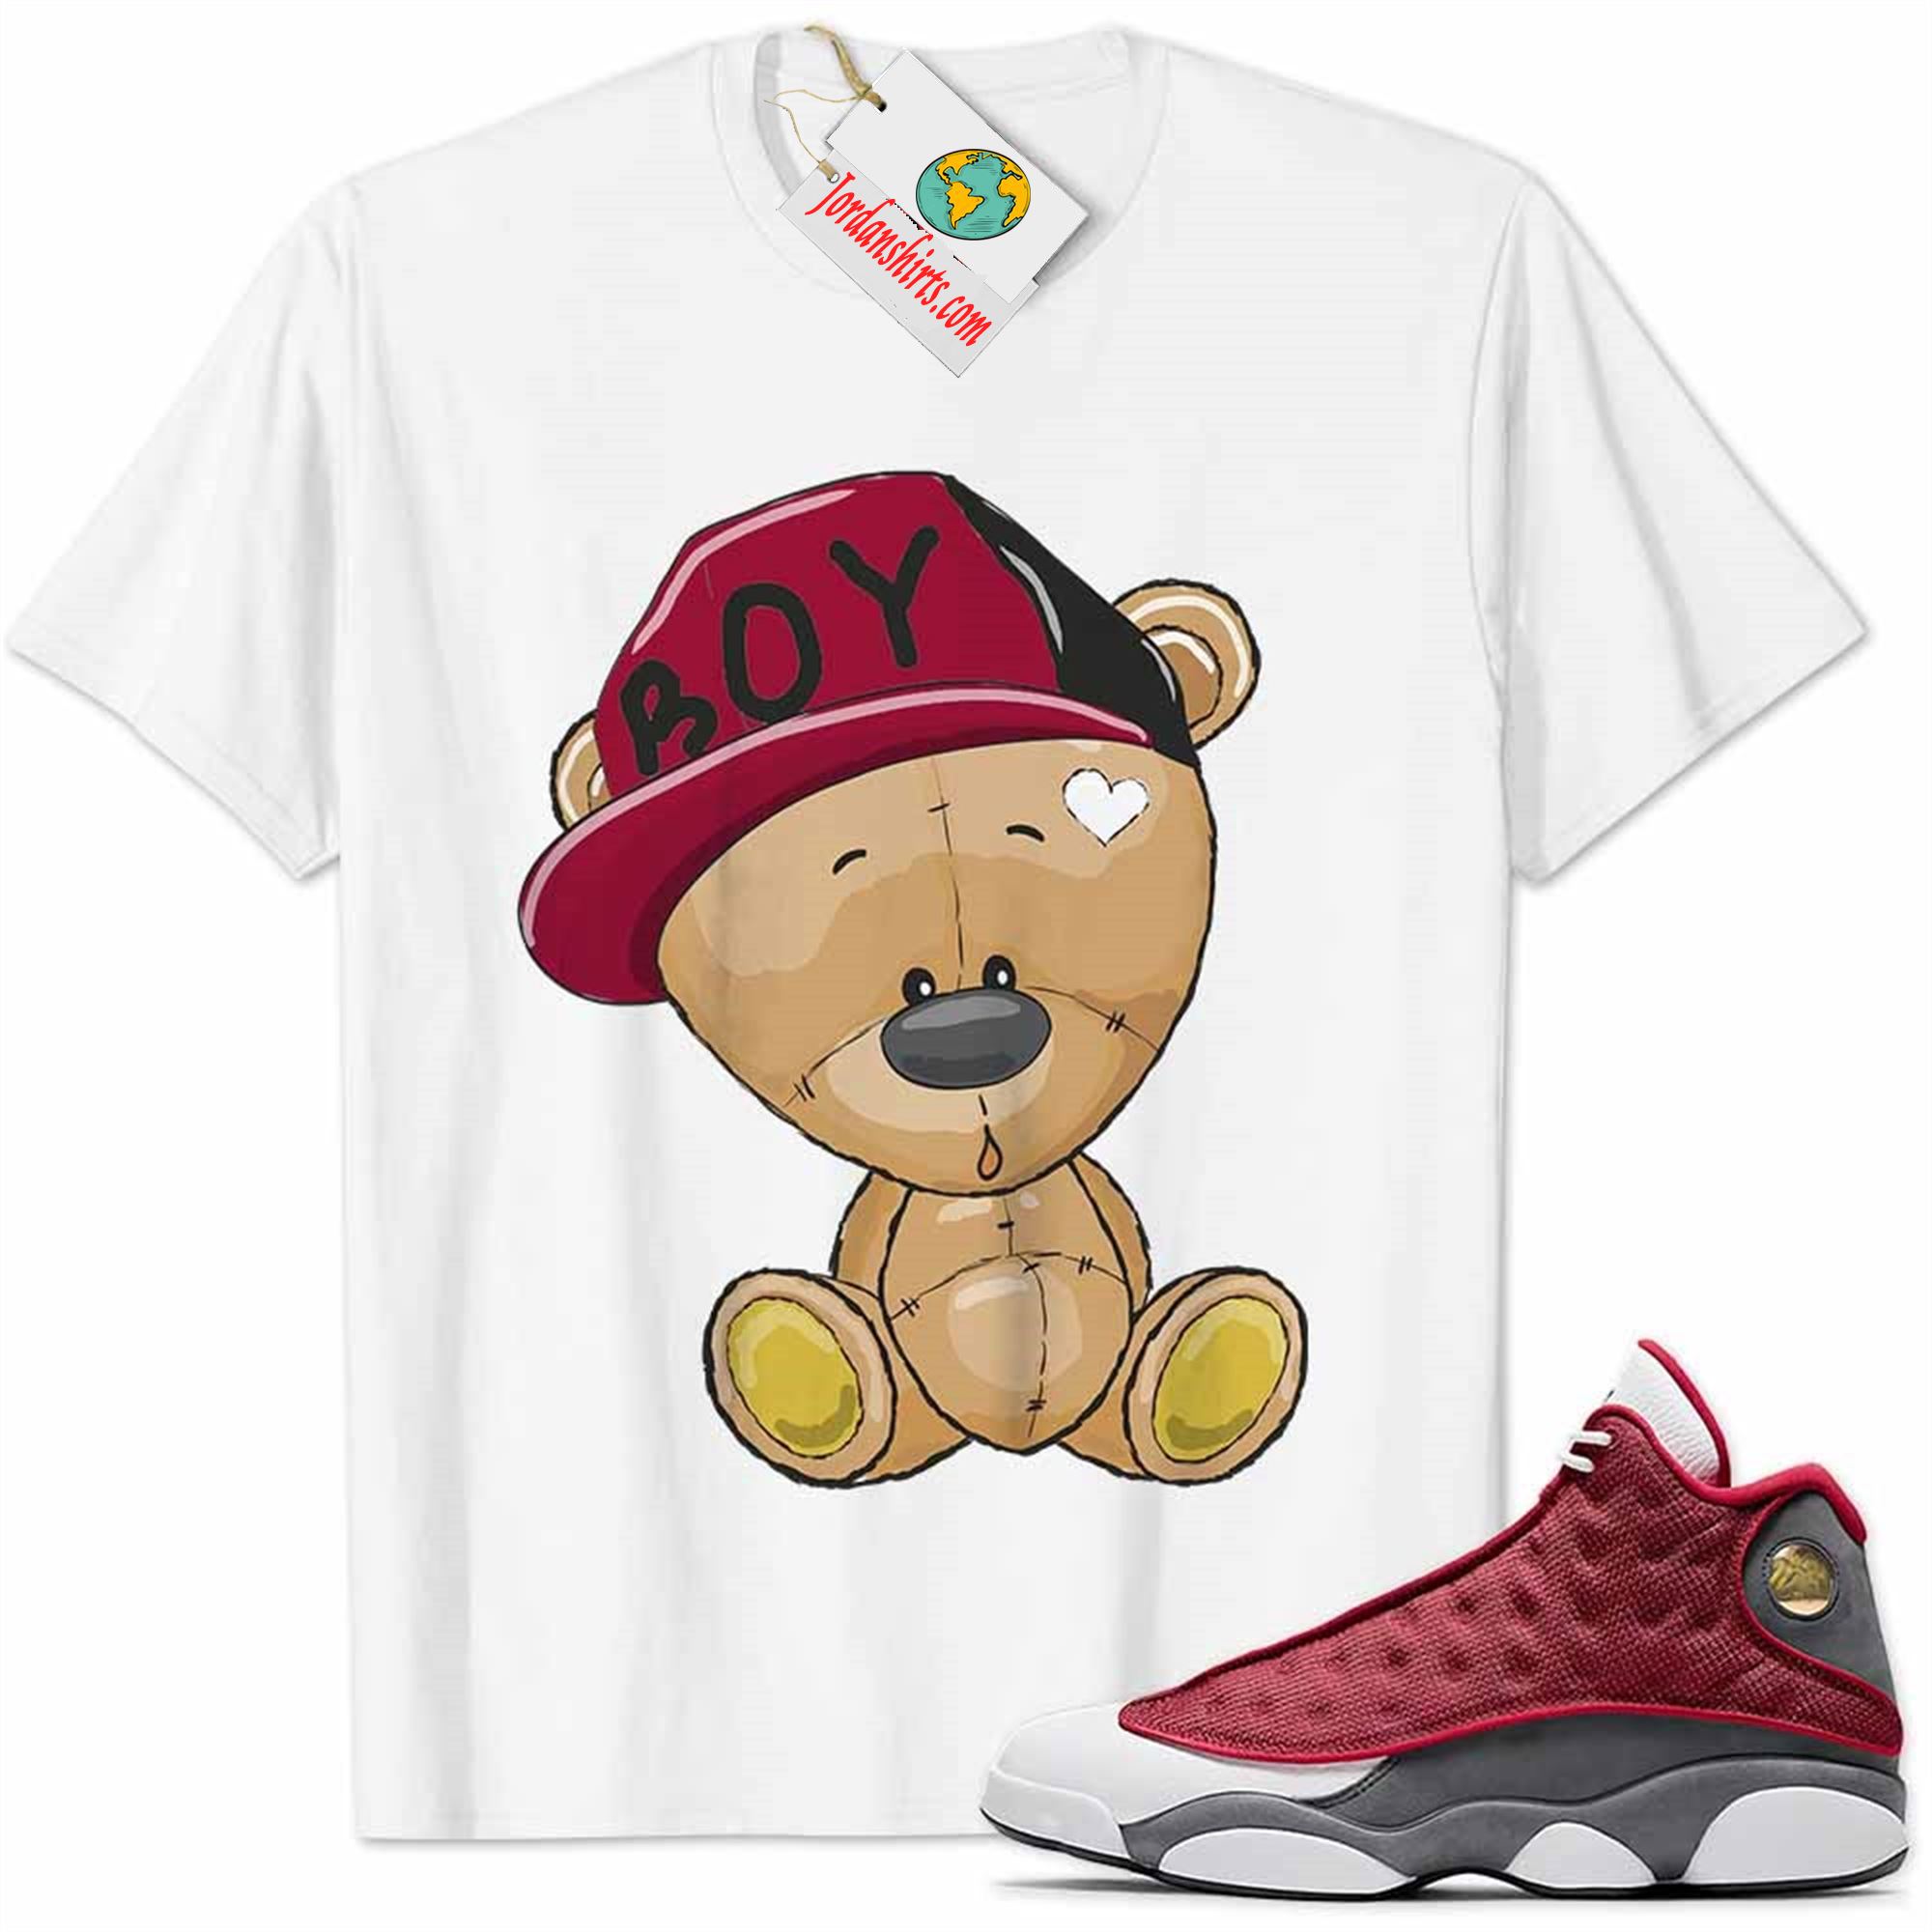 Jordan 13 Shirt, Jordan 13 Red Flint Shirt Cute Baby Teddy Bear White Full Size Up To 5xl